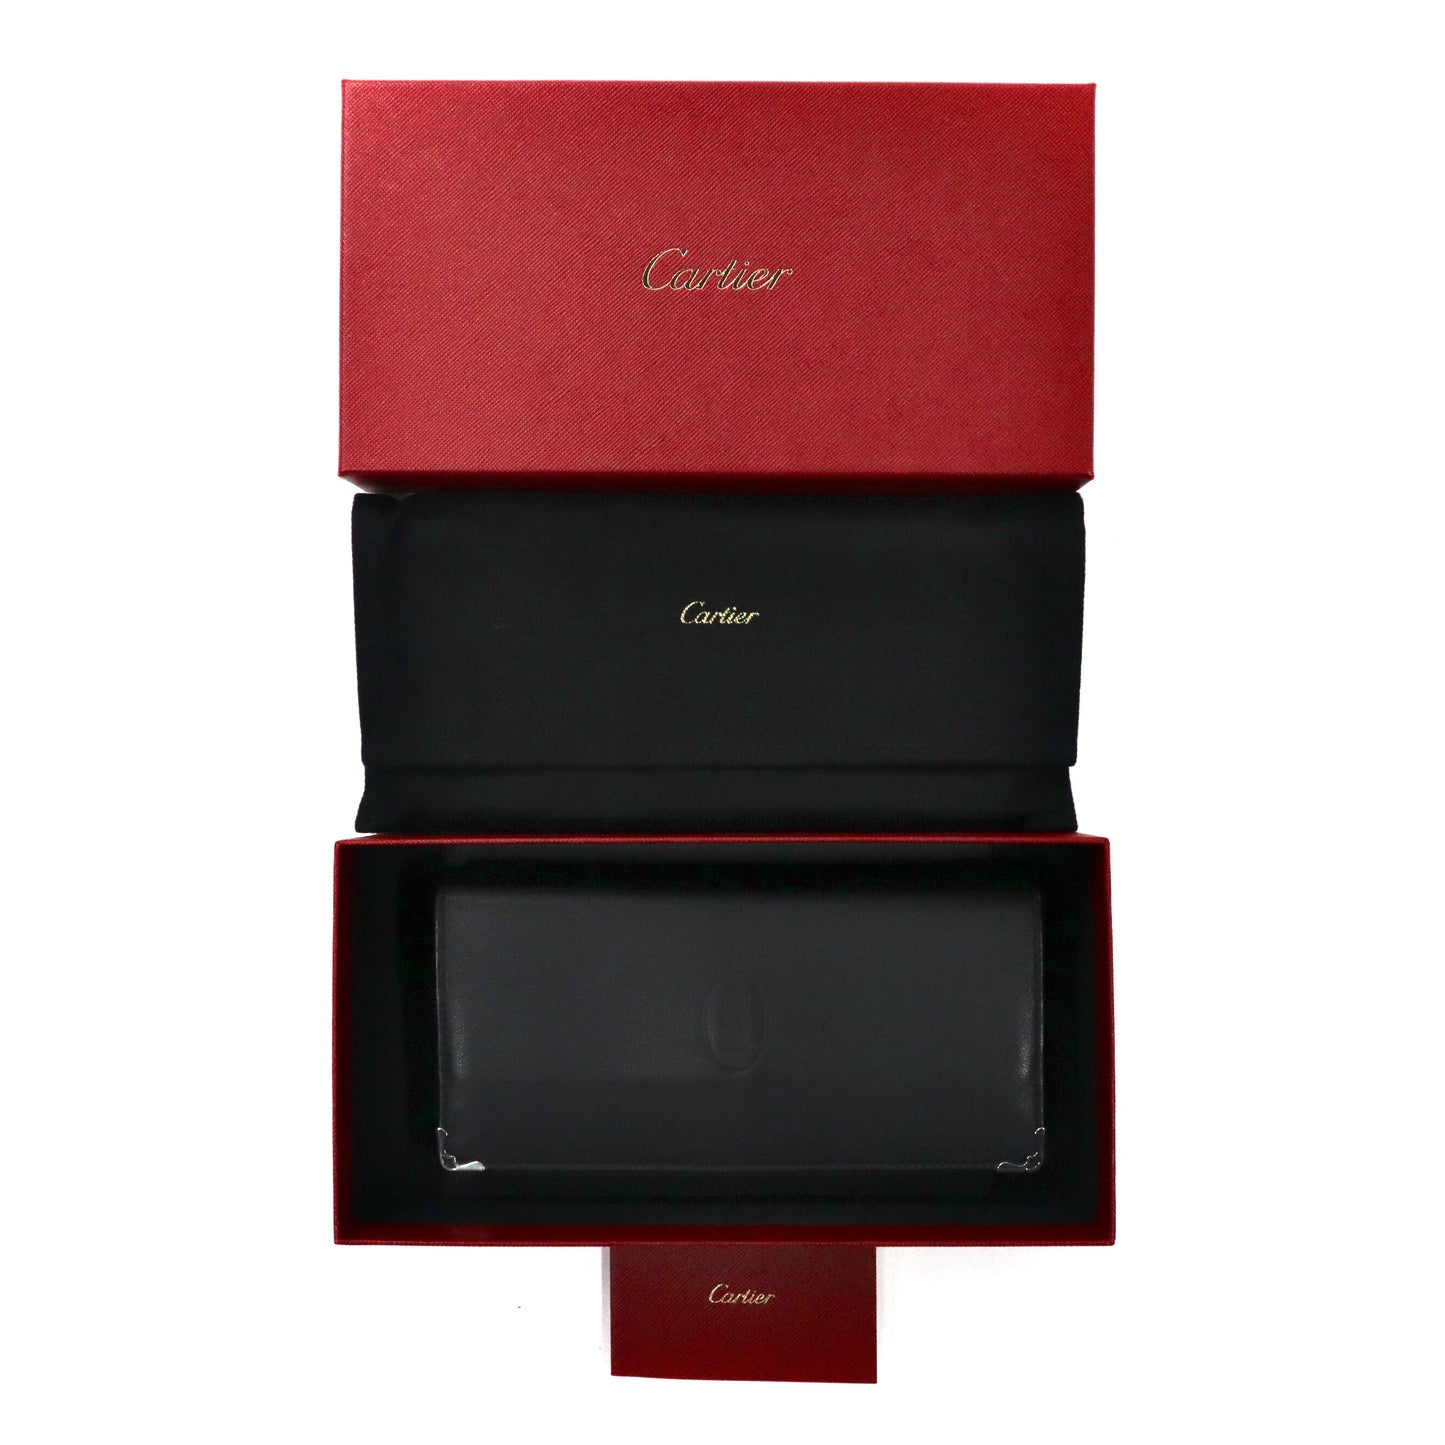 Cartier 長財布 ブラック レザー ZIPPED International WALLET L3001363 フランス製 未使用品